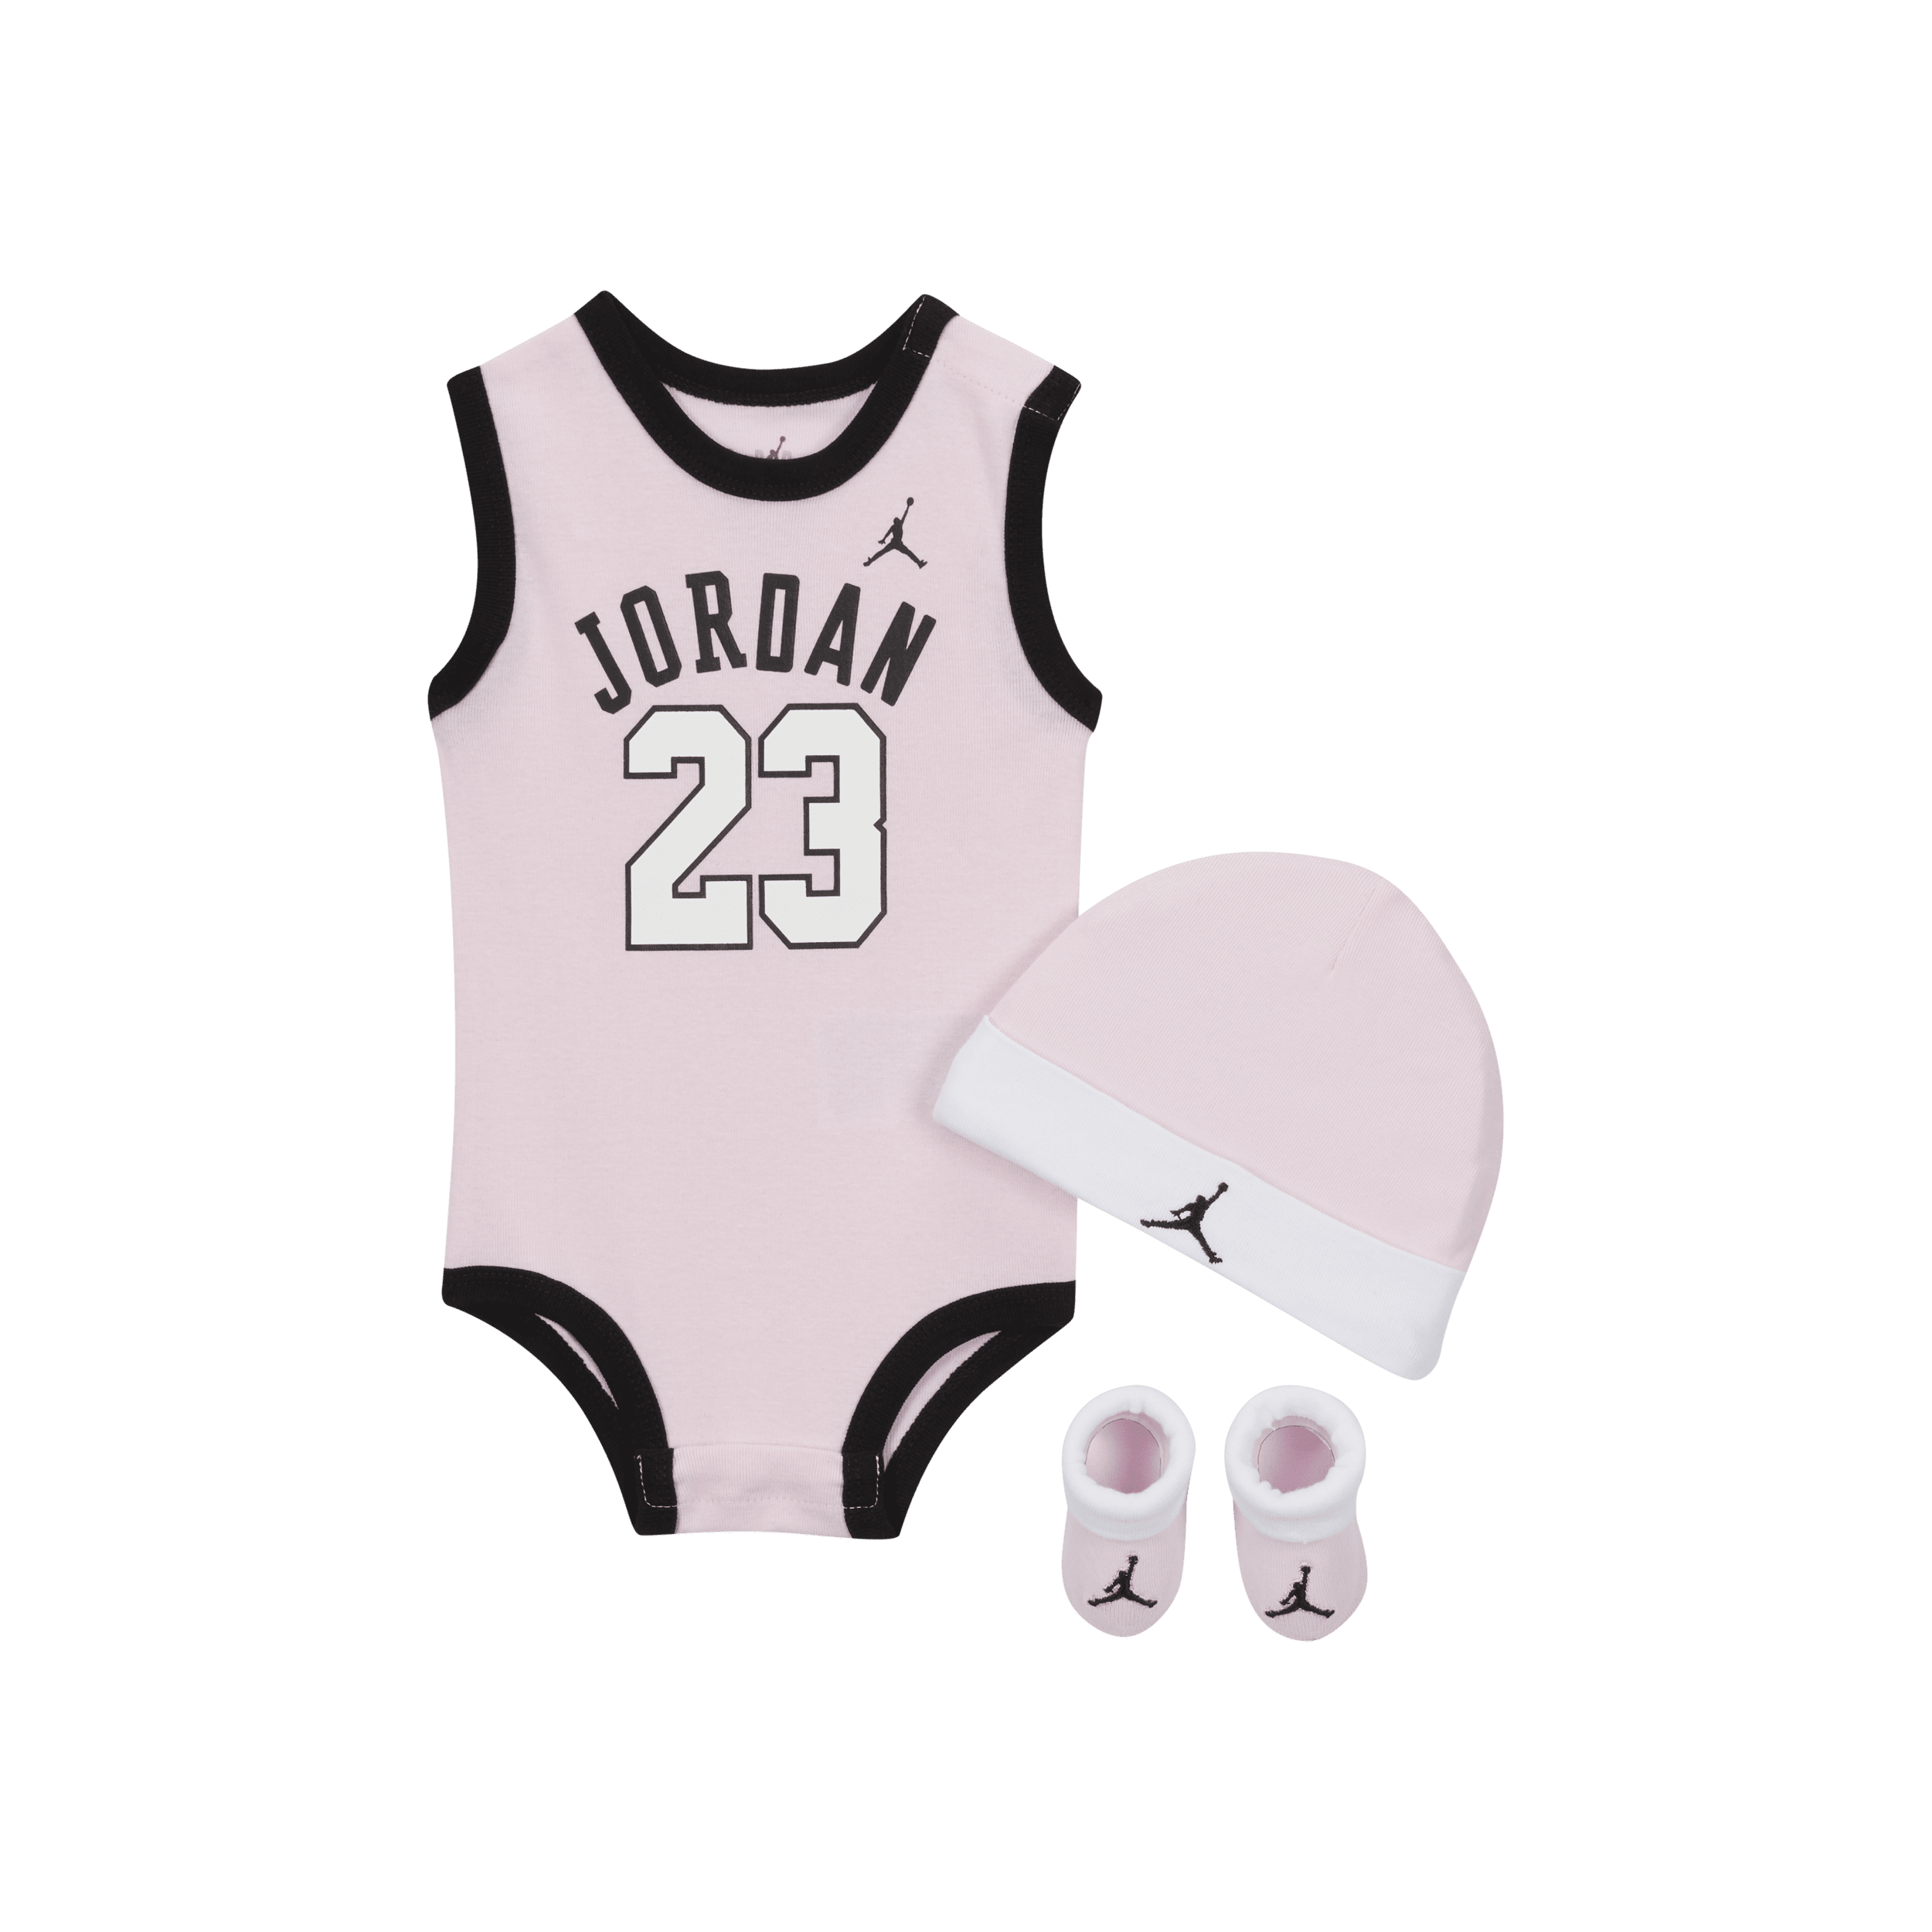 Jordan Jumpman Babyset met rompertje, beanie en booties - Roze